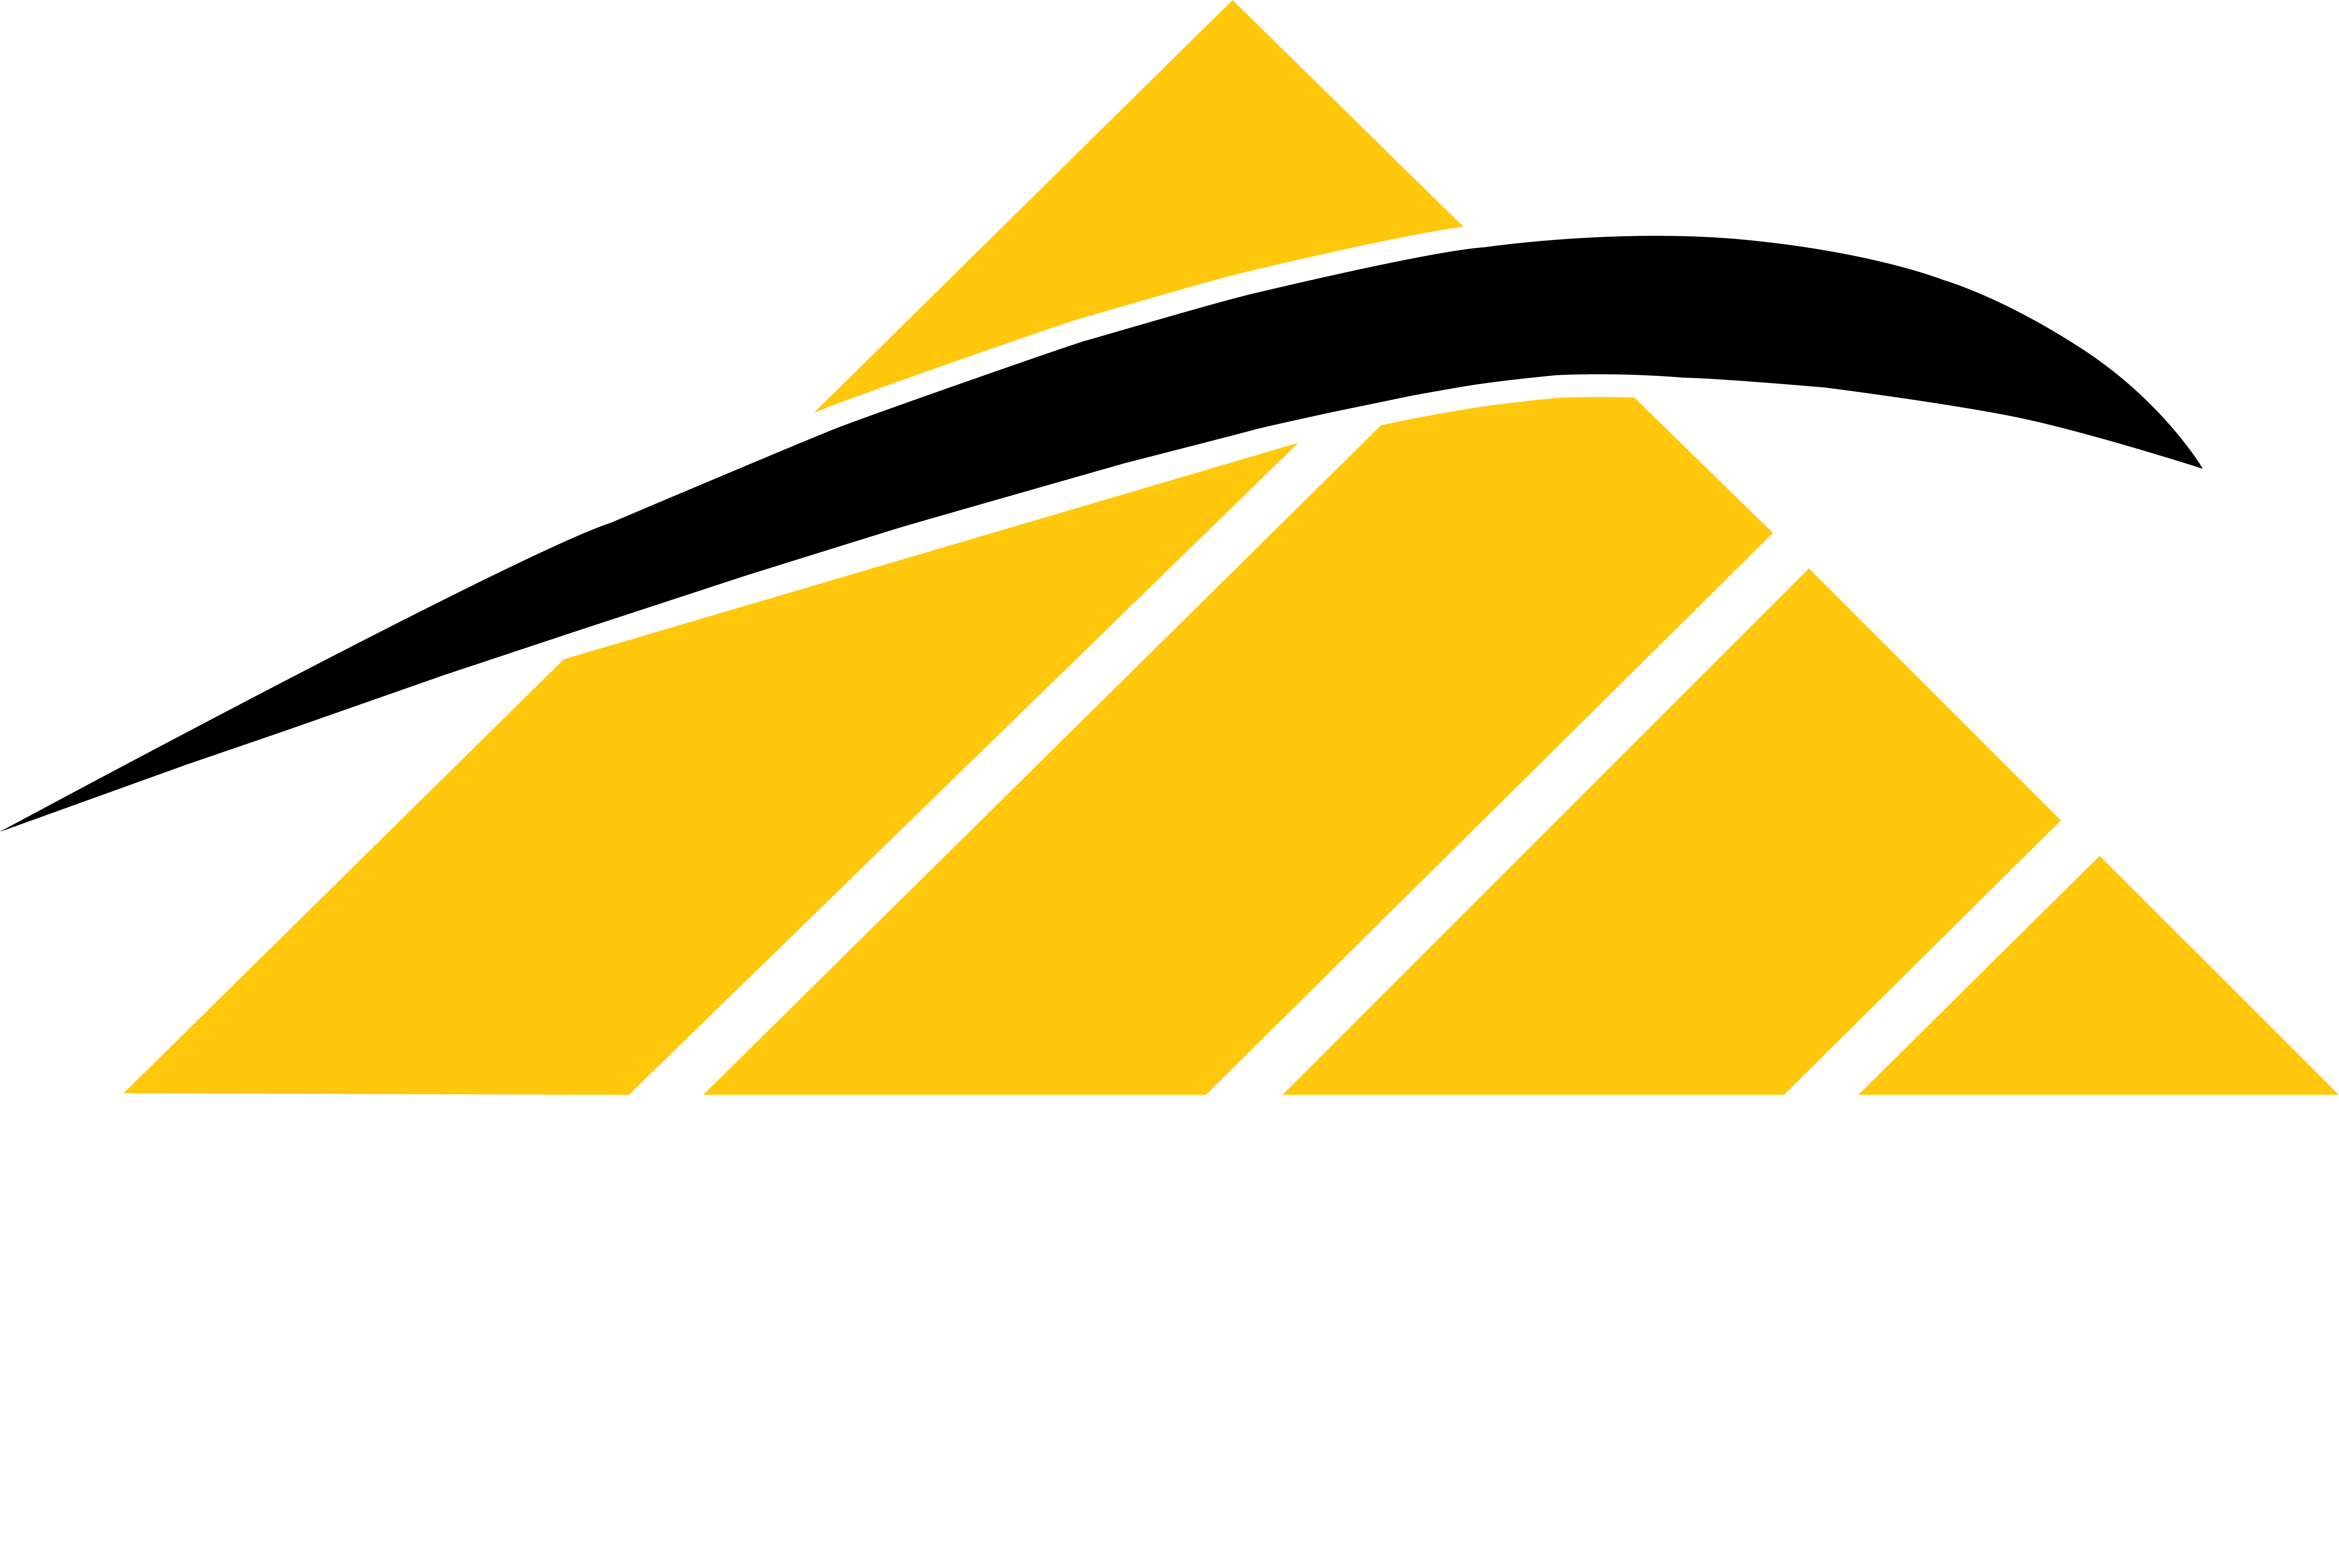 Sekandar Group